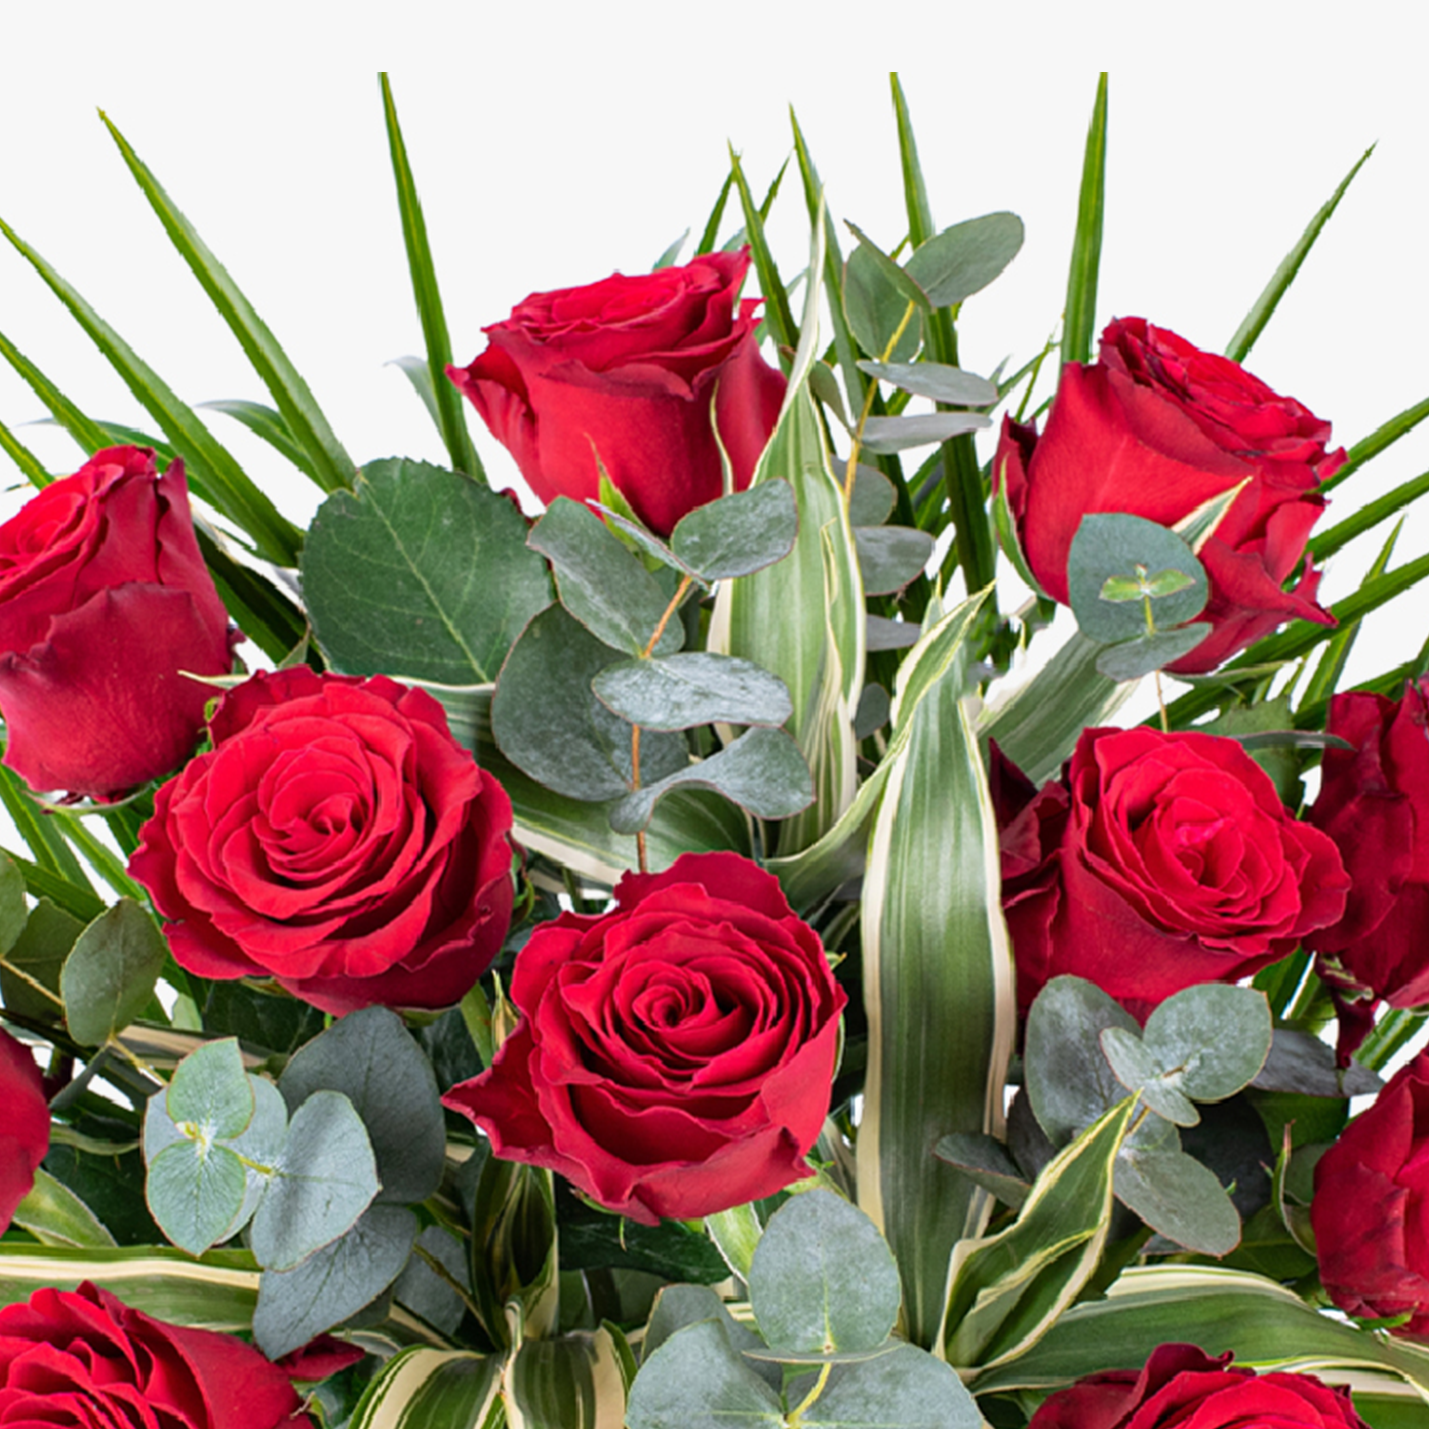 Send Romance: 12 Red Roses  Haute Florist Delivers Love